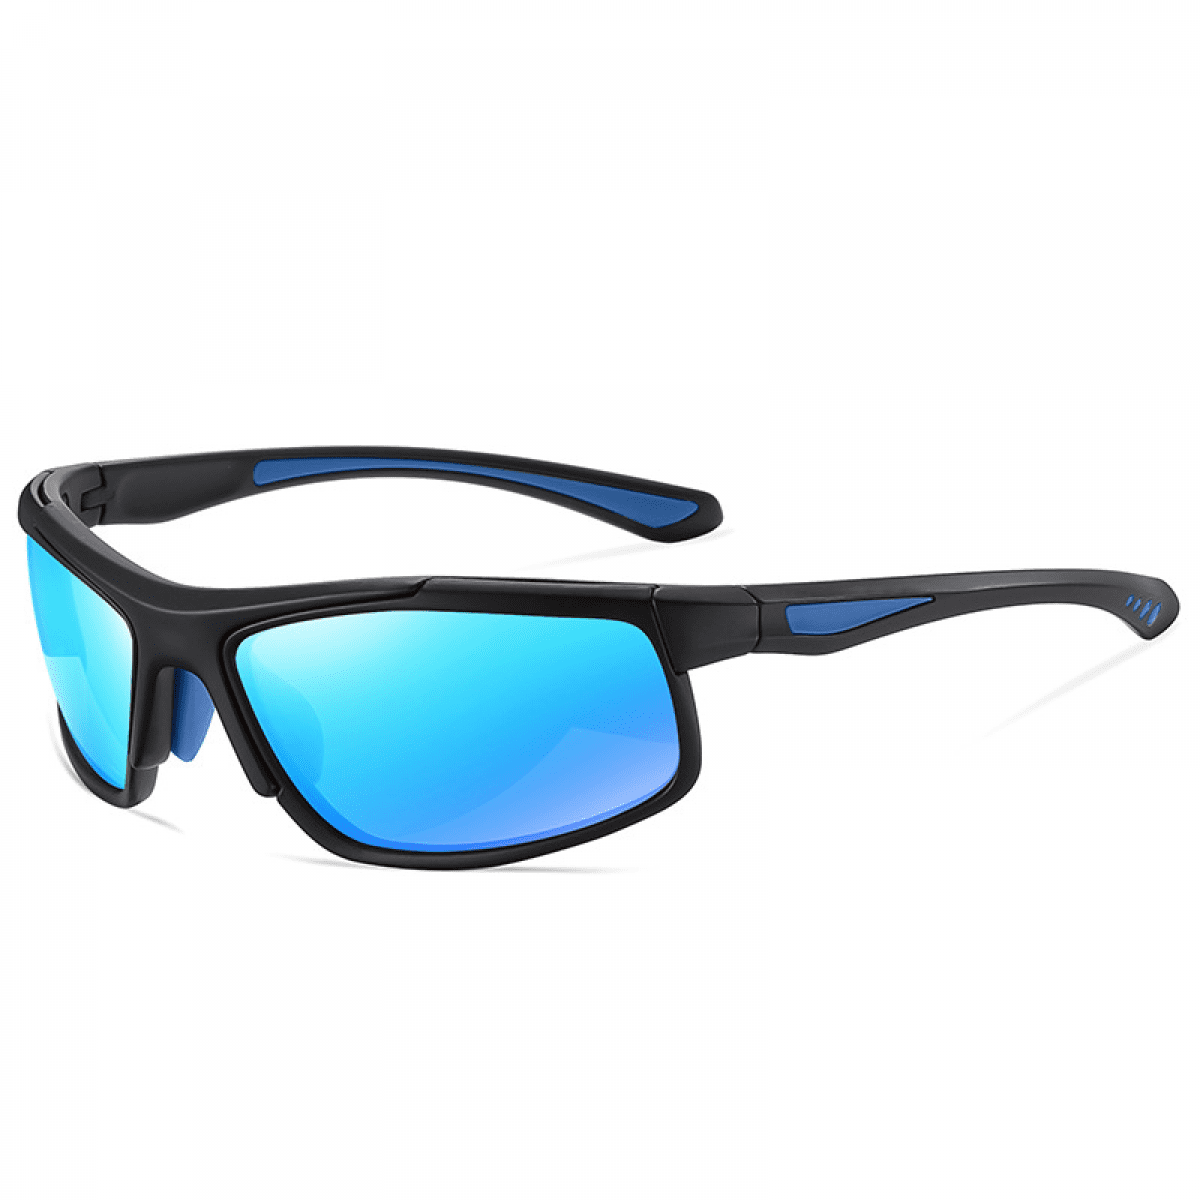 Tac Polarized sports sunglasses for Men Women Youth Baseball Military... 